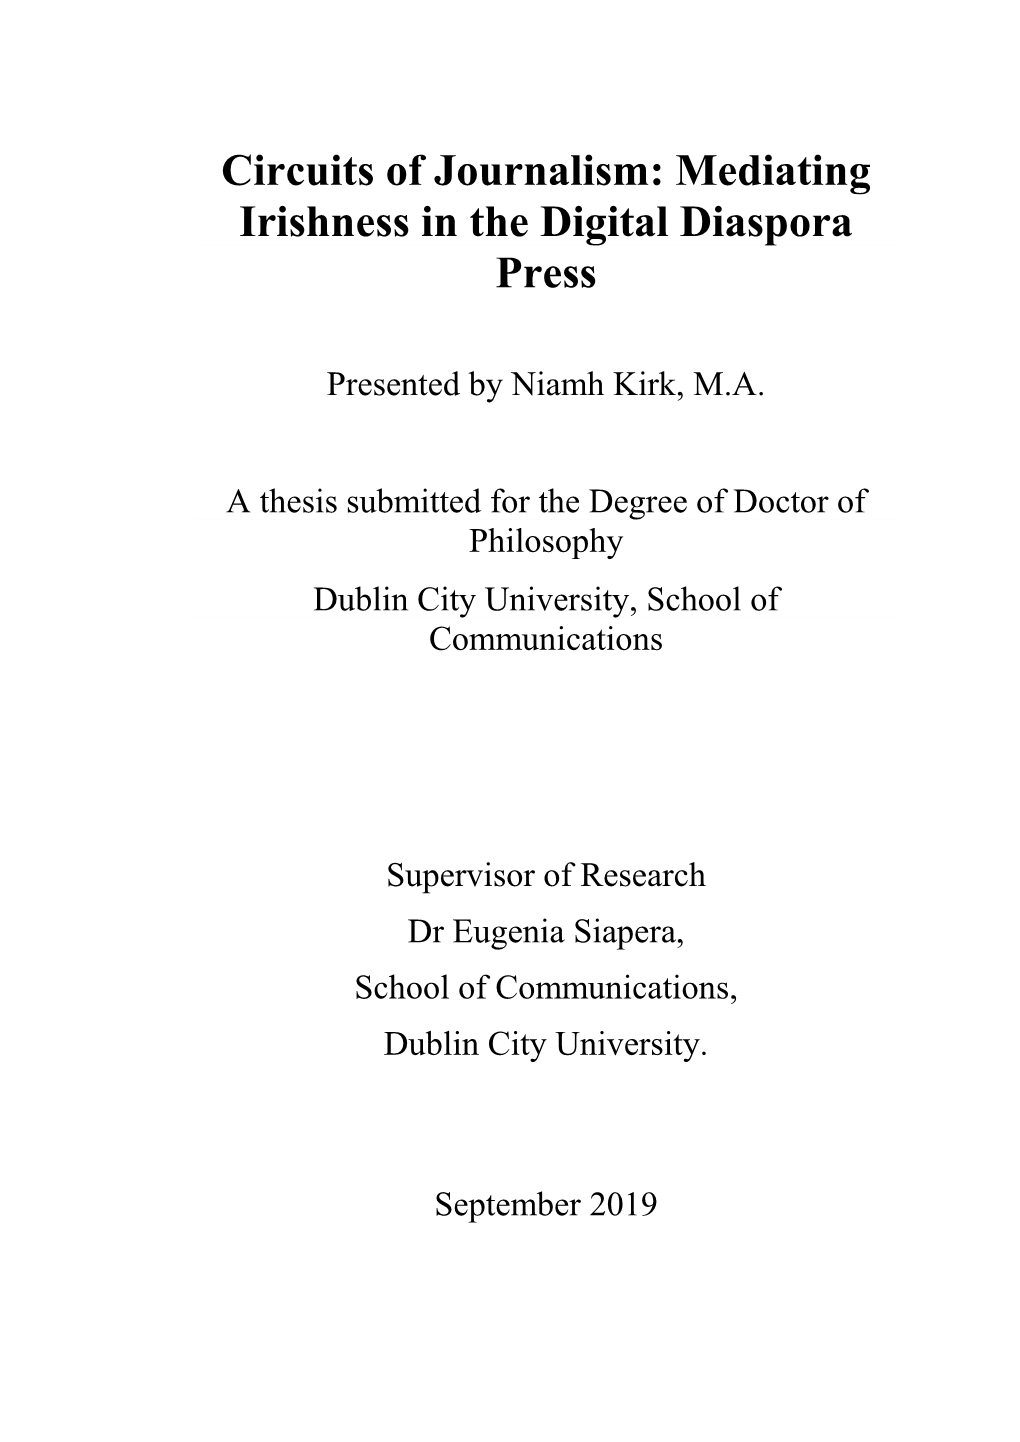 Circuits of Journalism: Mediating Irishness in the Digital Diaspora Press